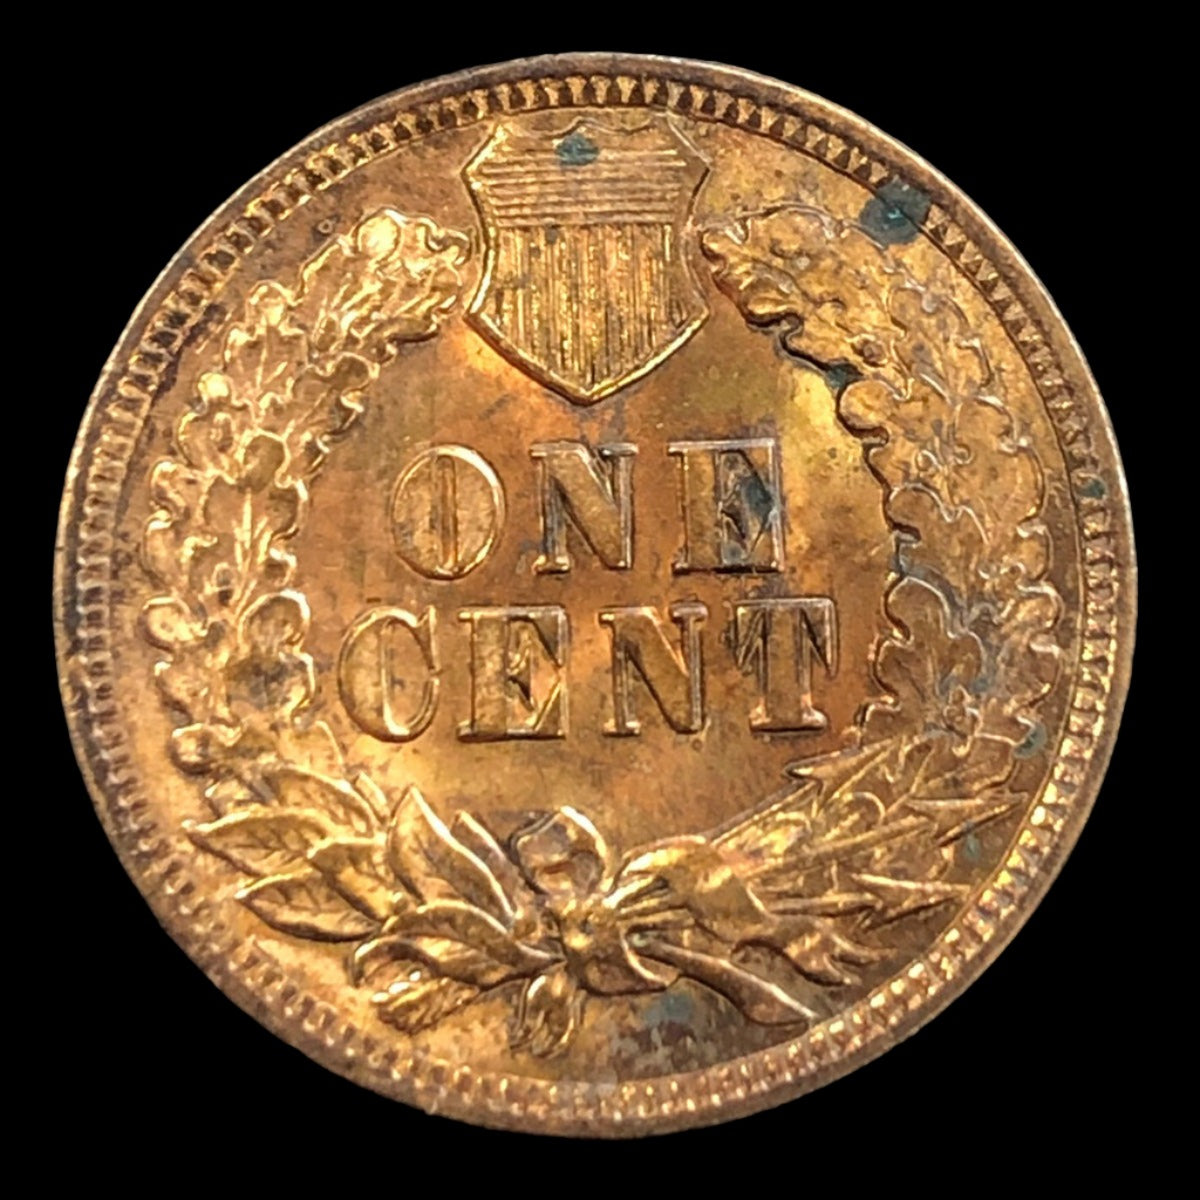 1902 Indian Head Cent (BU)